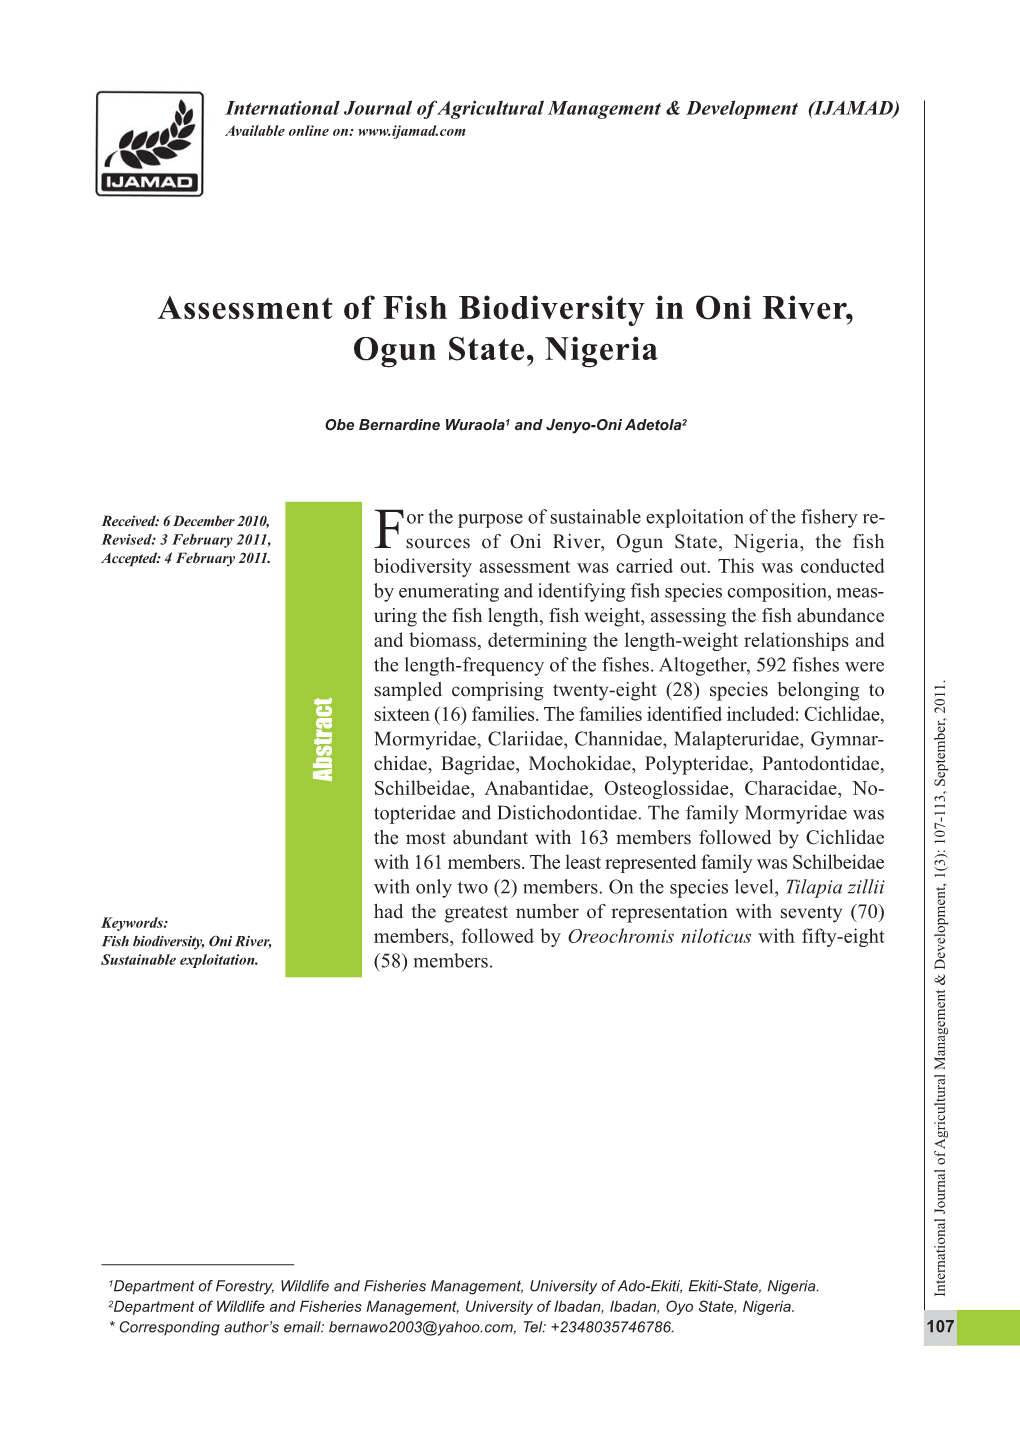 Assessment of Fish Biodiversity in Oni River, Ogun State, Nigeria